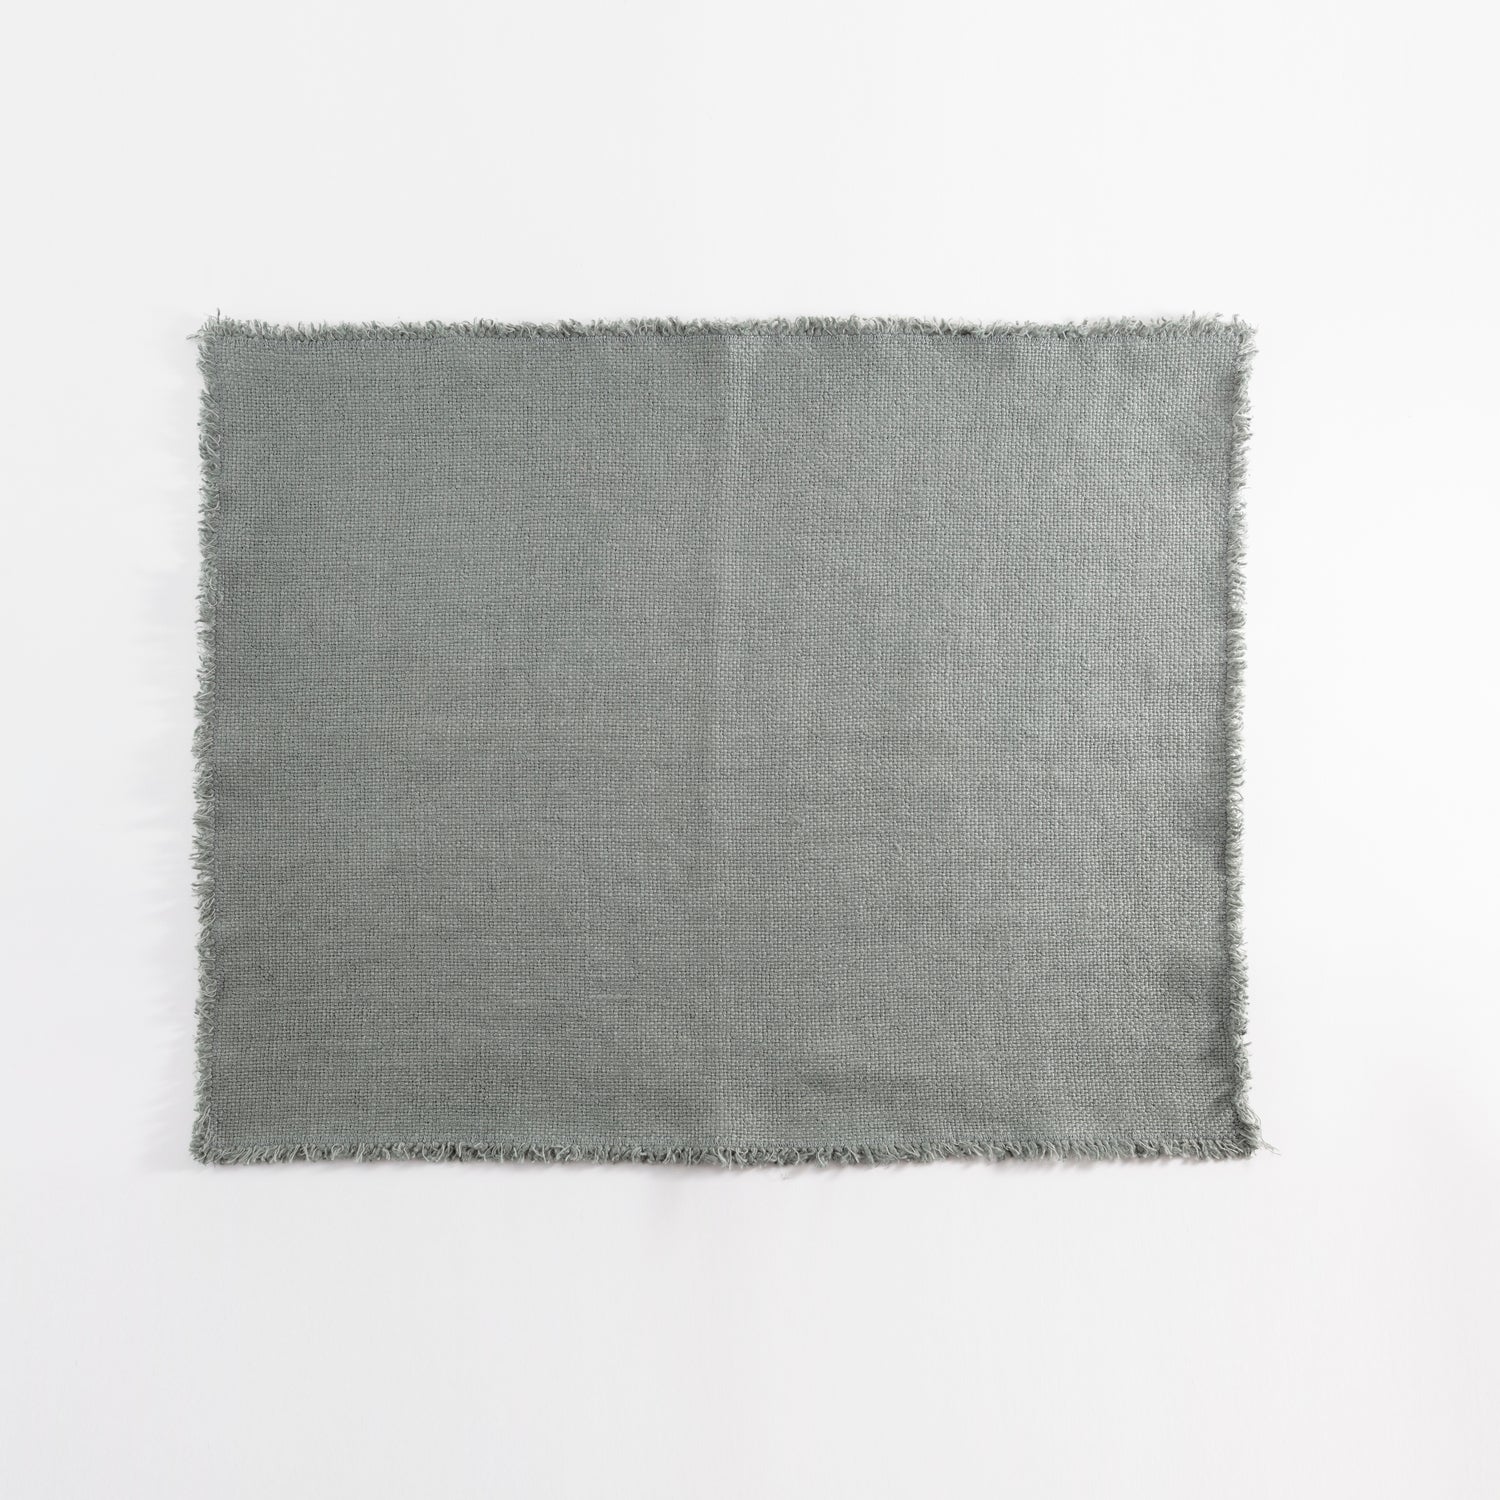 Grey fabric with frayed edges laid flat on white background.